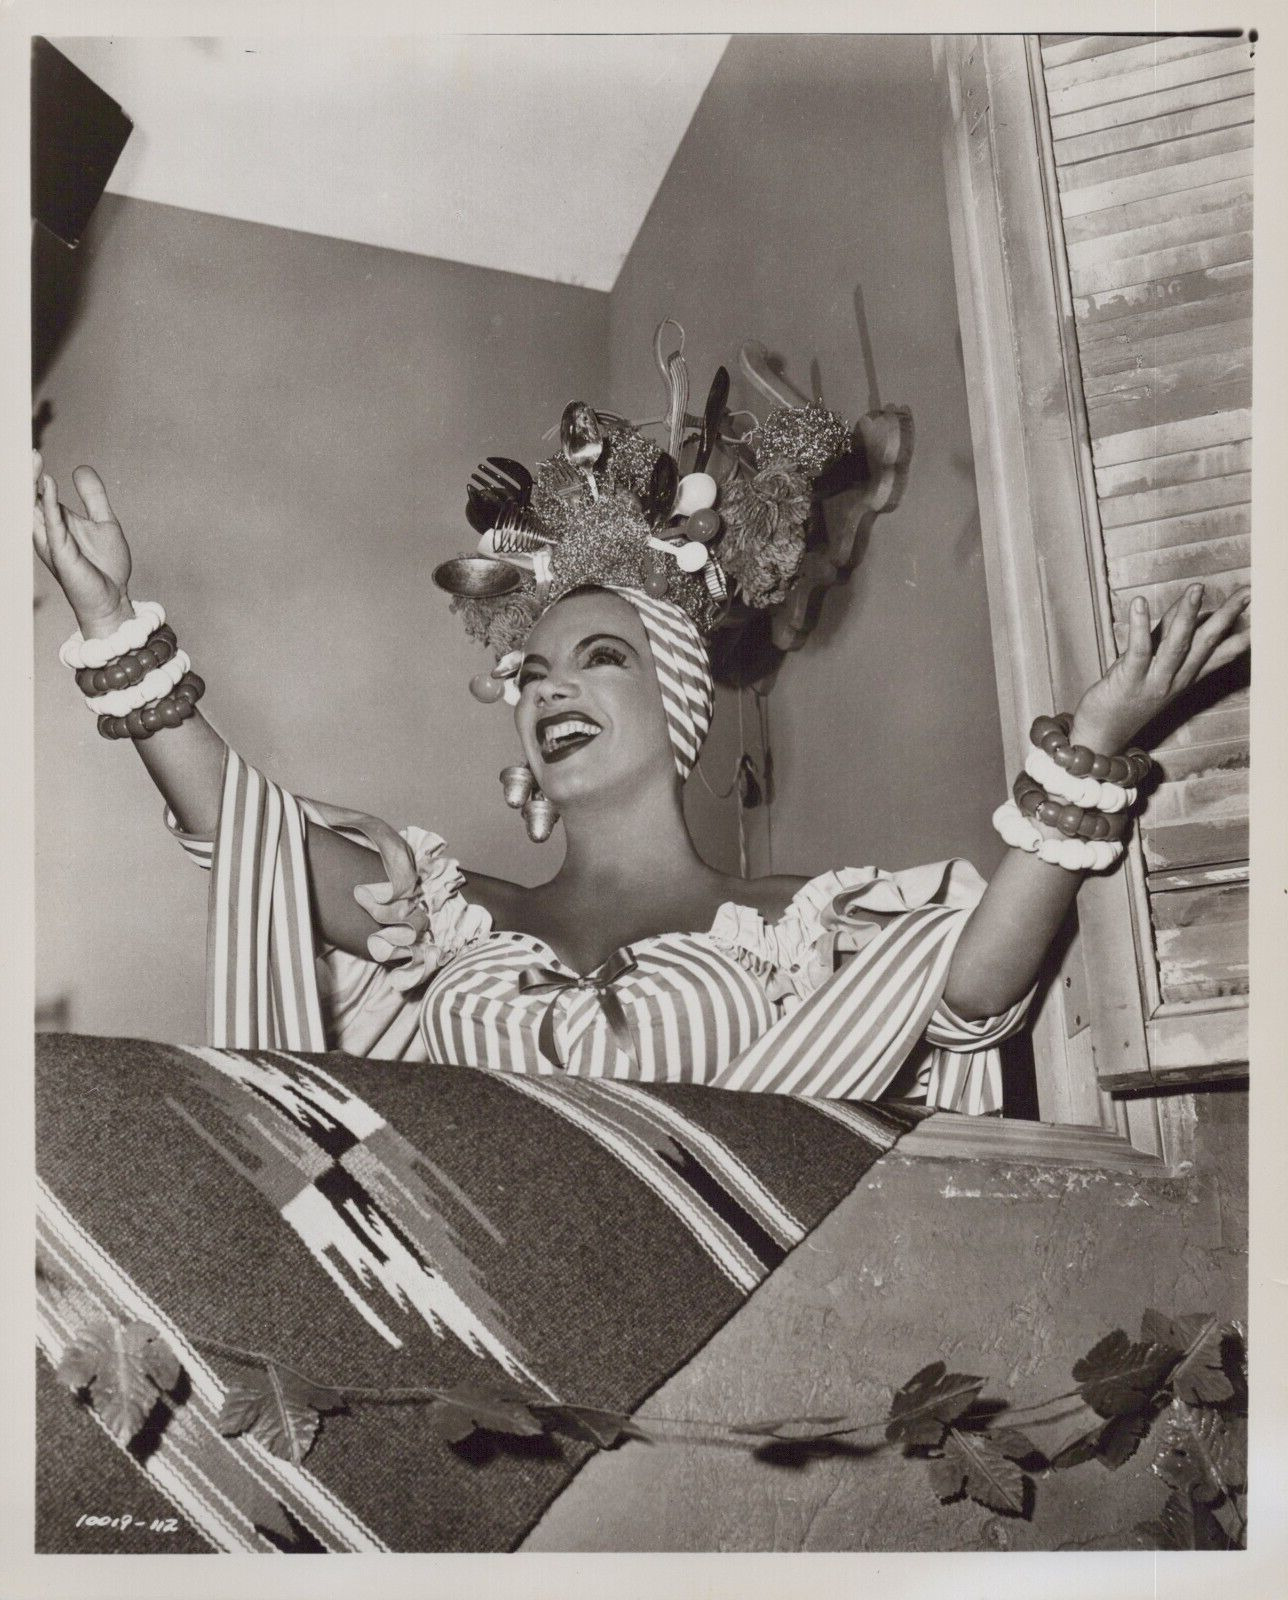 HOLLYWOOD BEAUTY CARMEN MIRANDA STYLISH POSE STUNNING PORTRAIT 1950s Photo N